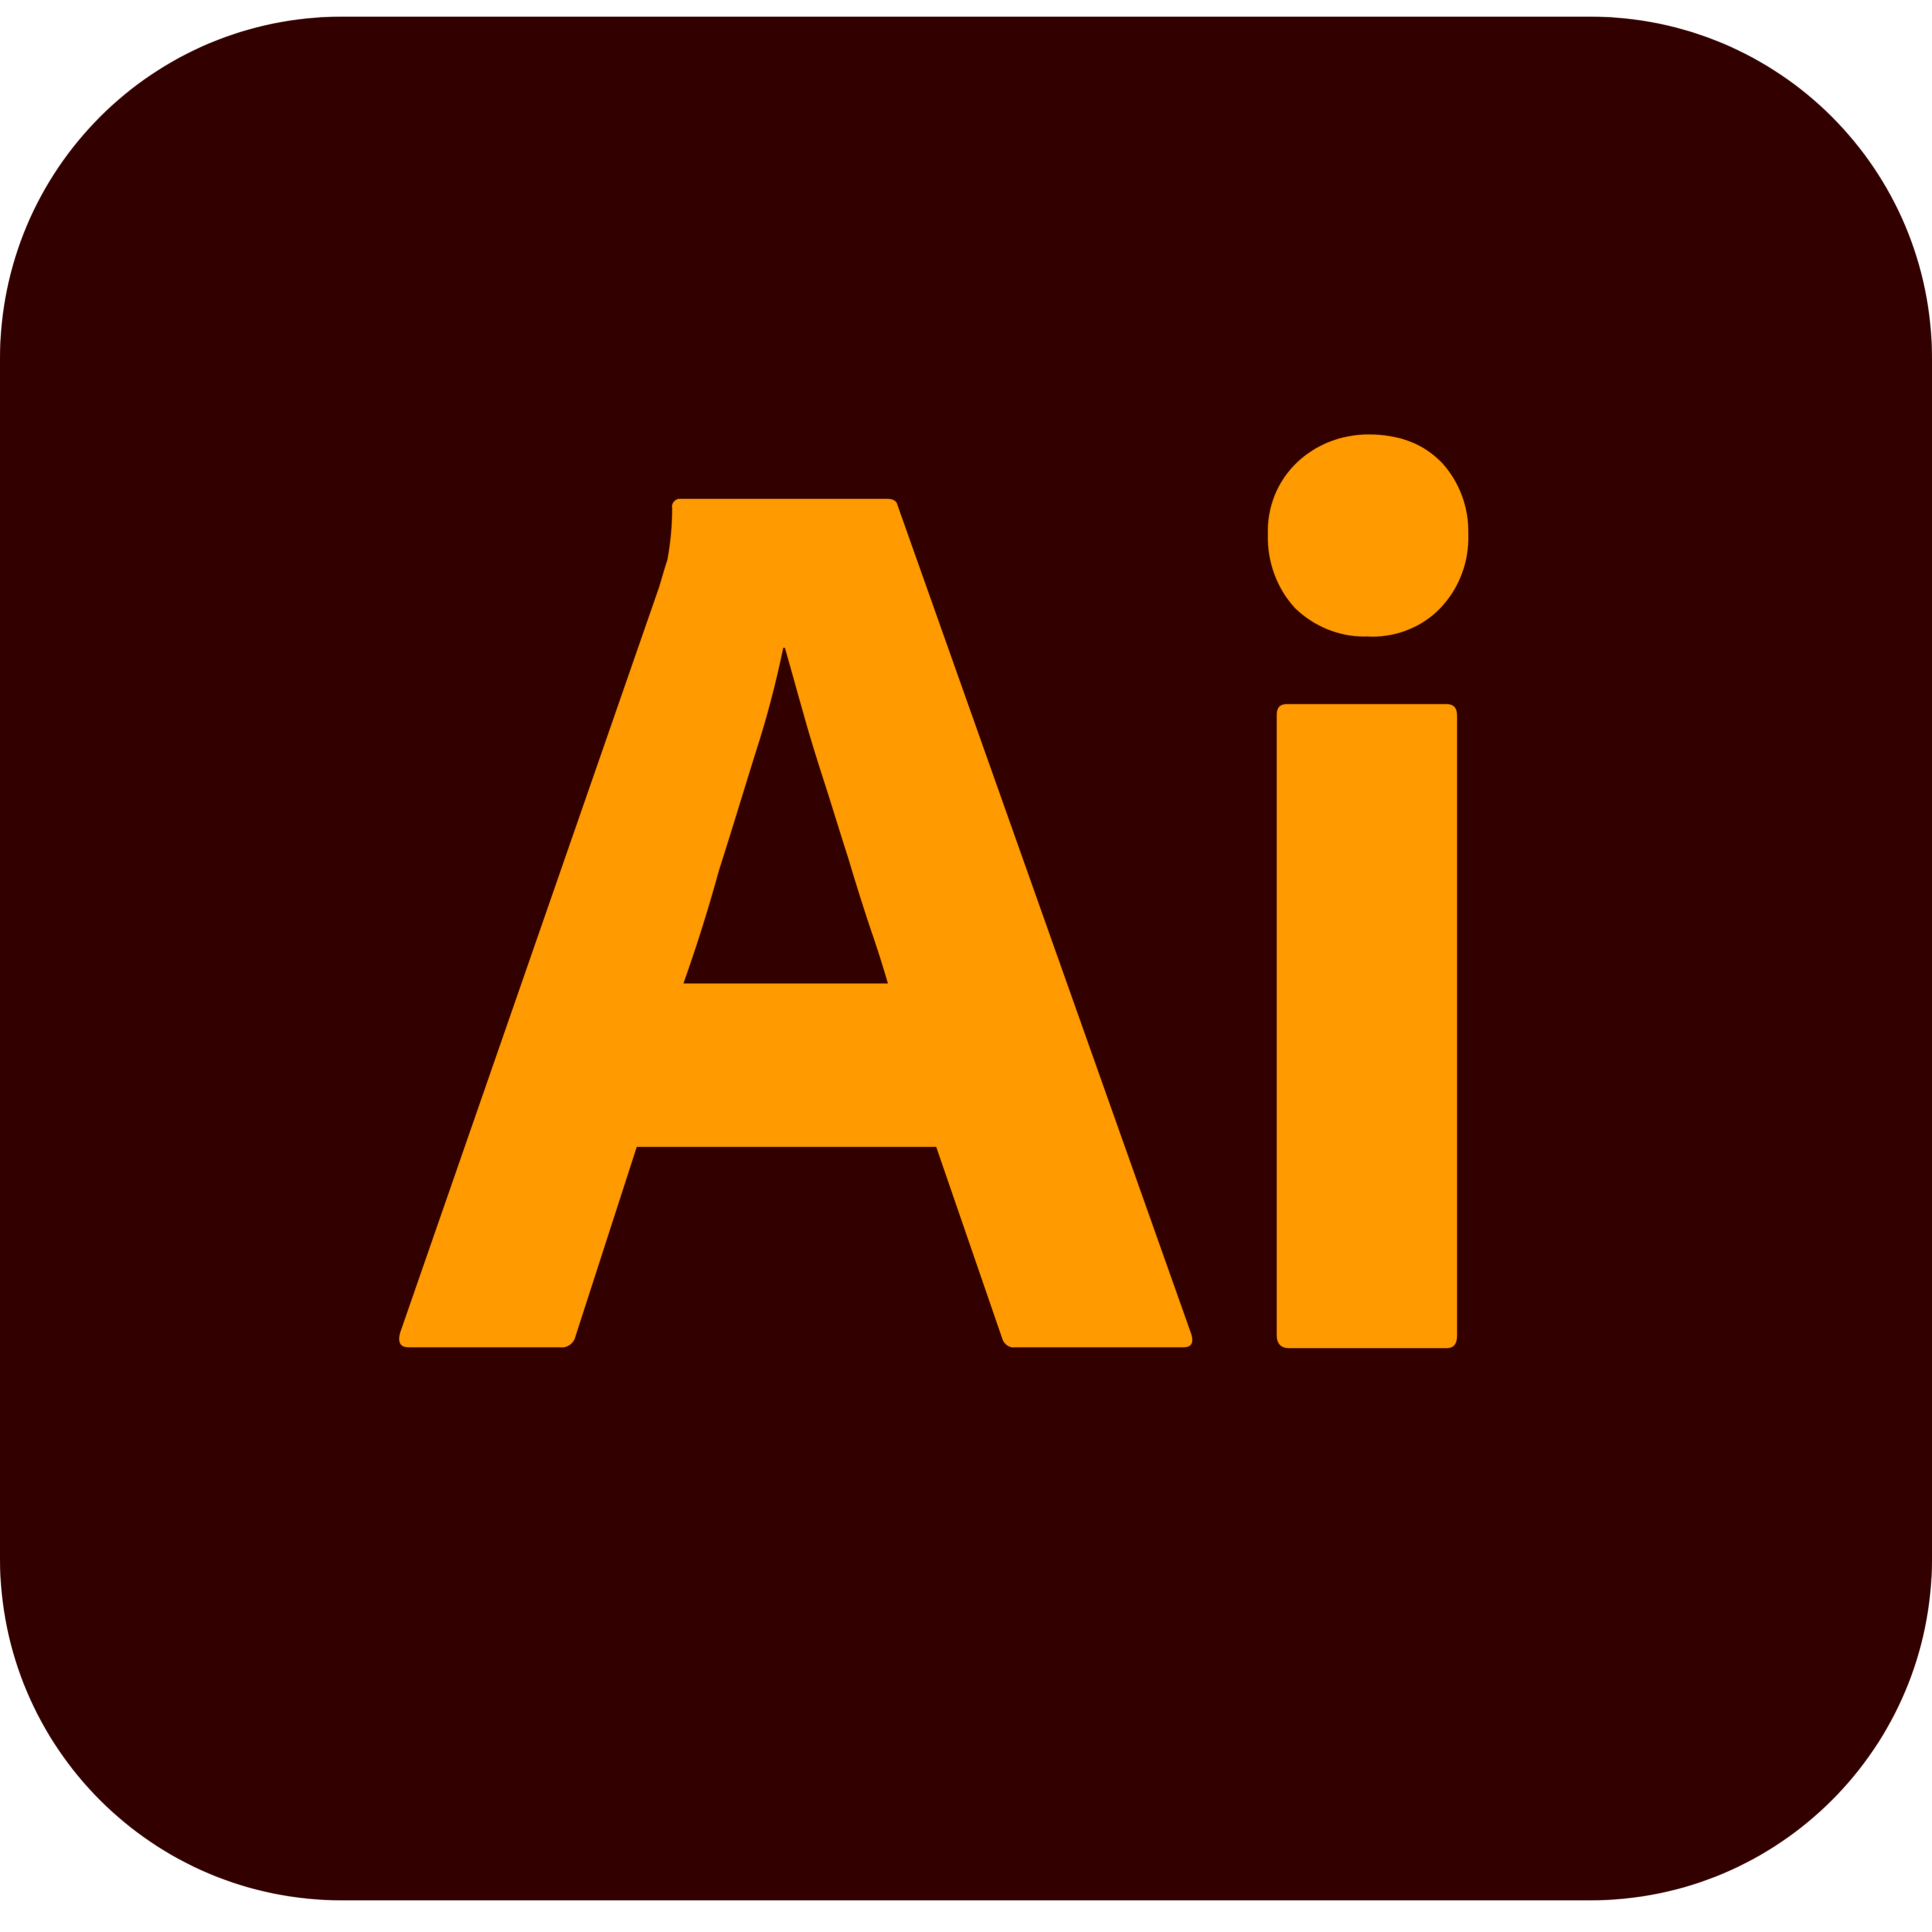 Ai adobe. Adobe Illustrator ярлык. Адоб иллюстратор лого. Adobe Illustrator cc логотип. Adobe Illustrator 2021.